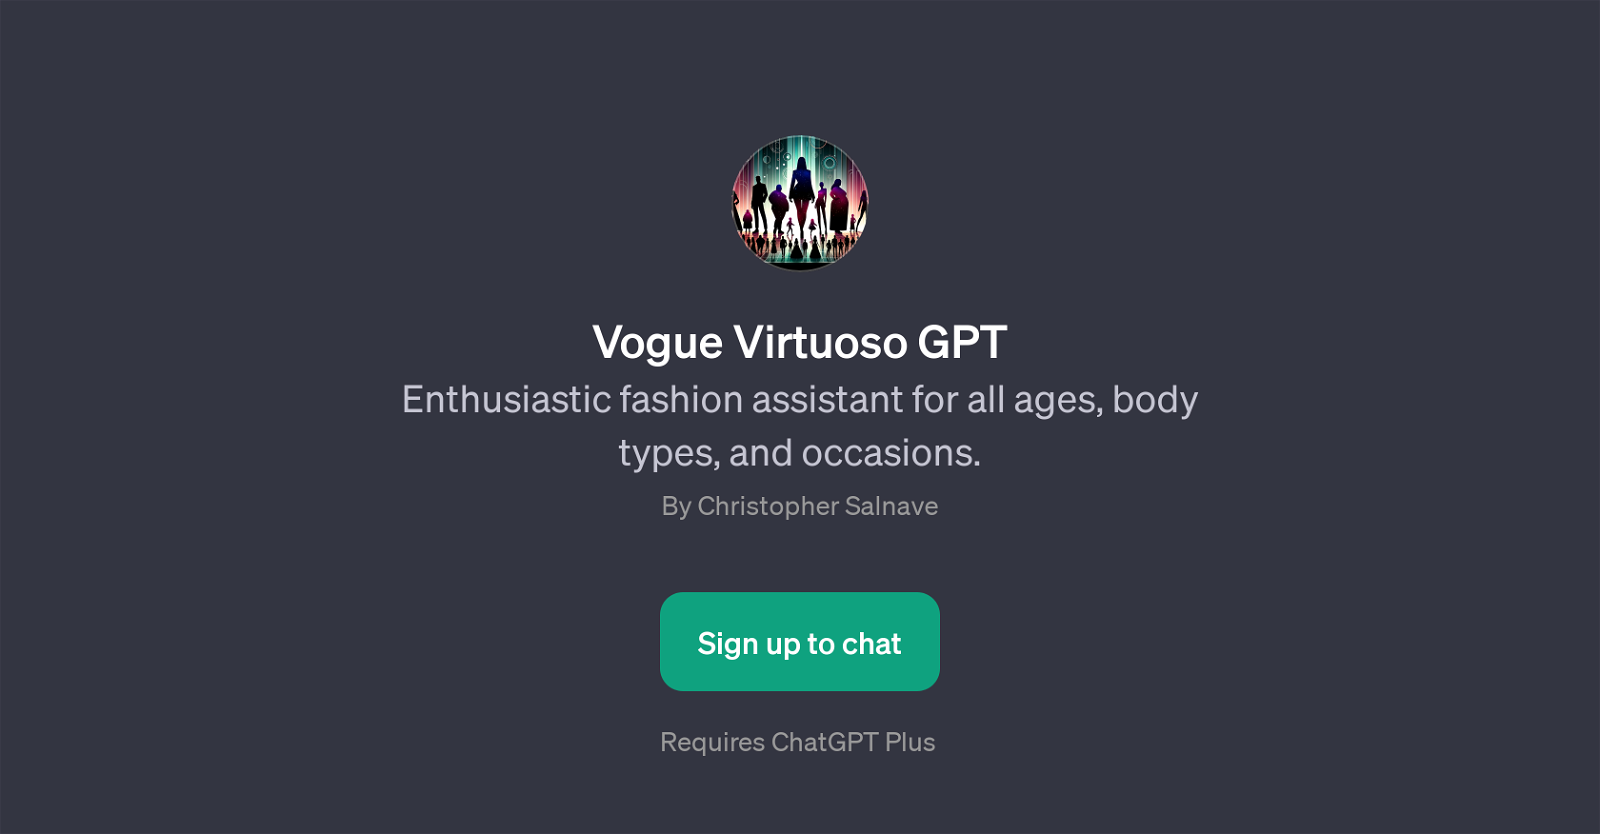 Vogue Virtuoso GPT website